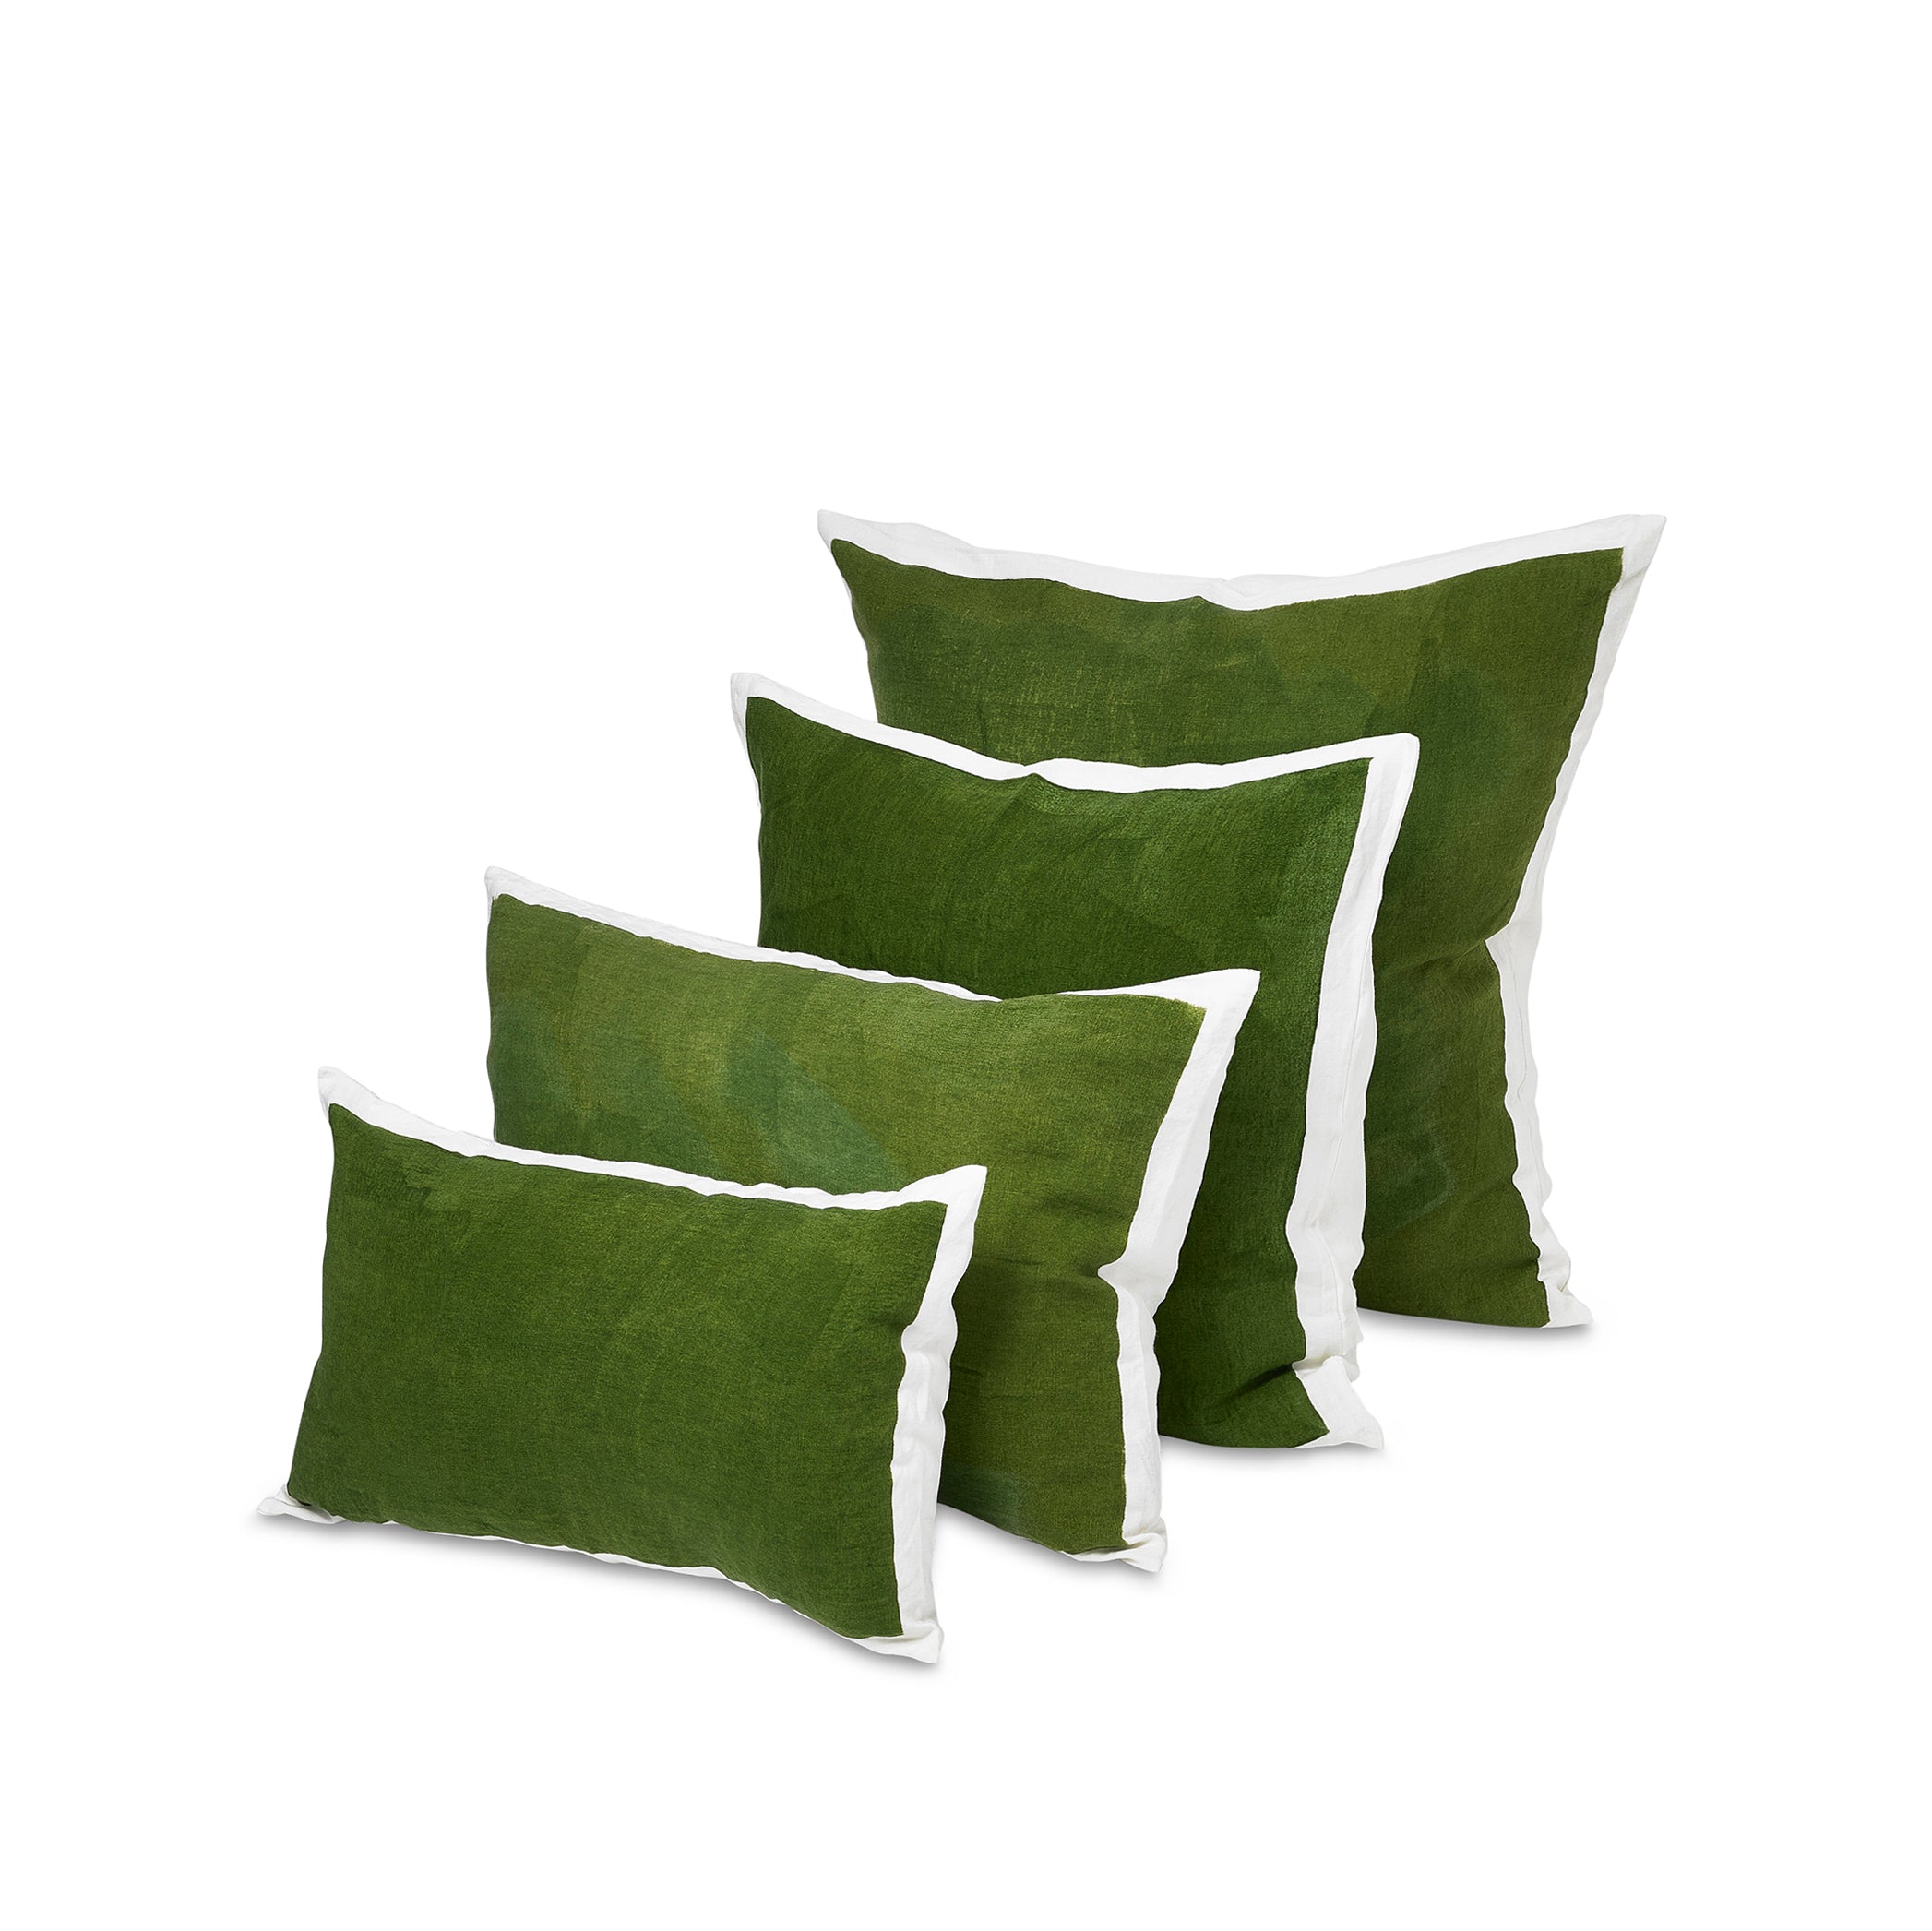 Hand Painted Linen Cushion in Avocado Green, 50cm x 50cm